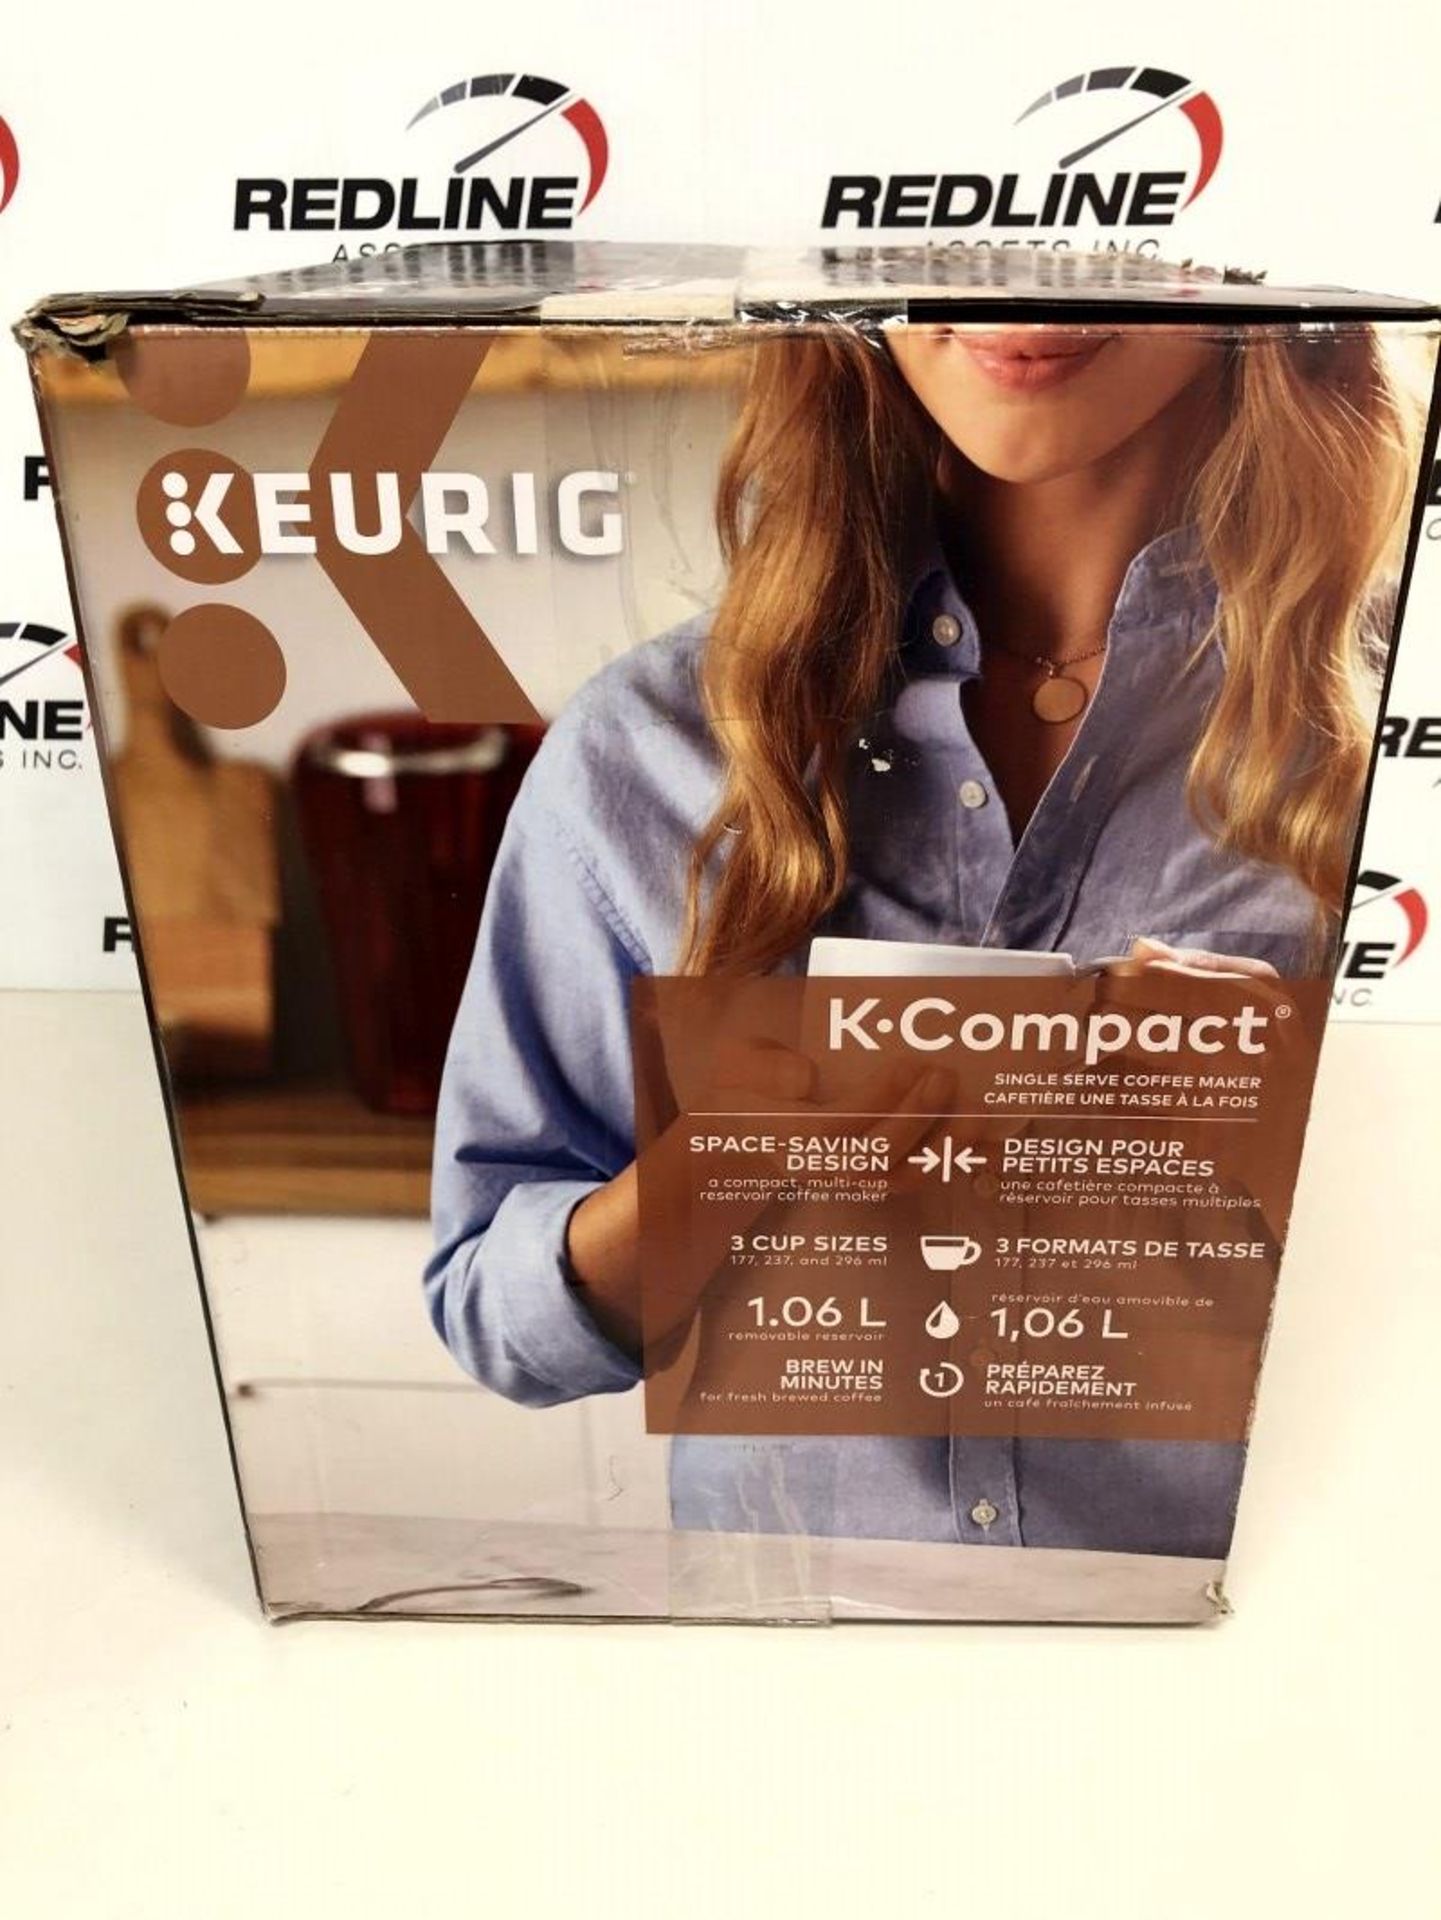 Keurig - Kcompact Single Serve Coffee Maker - 1.06L - Image 2 of 2